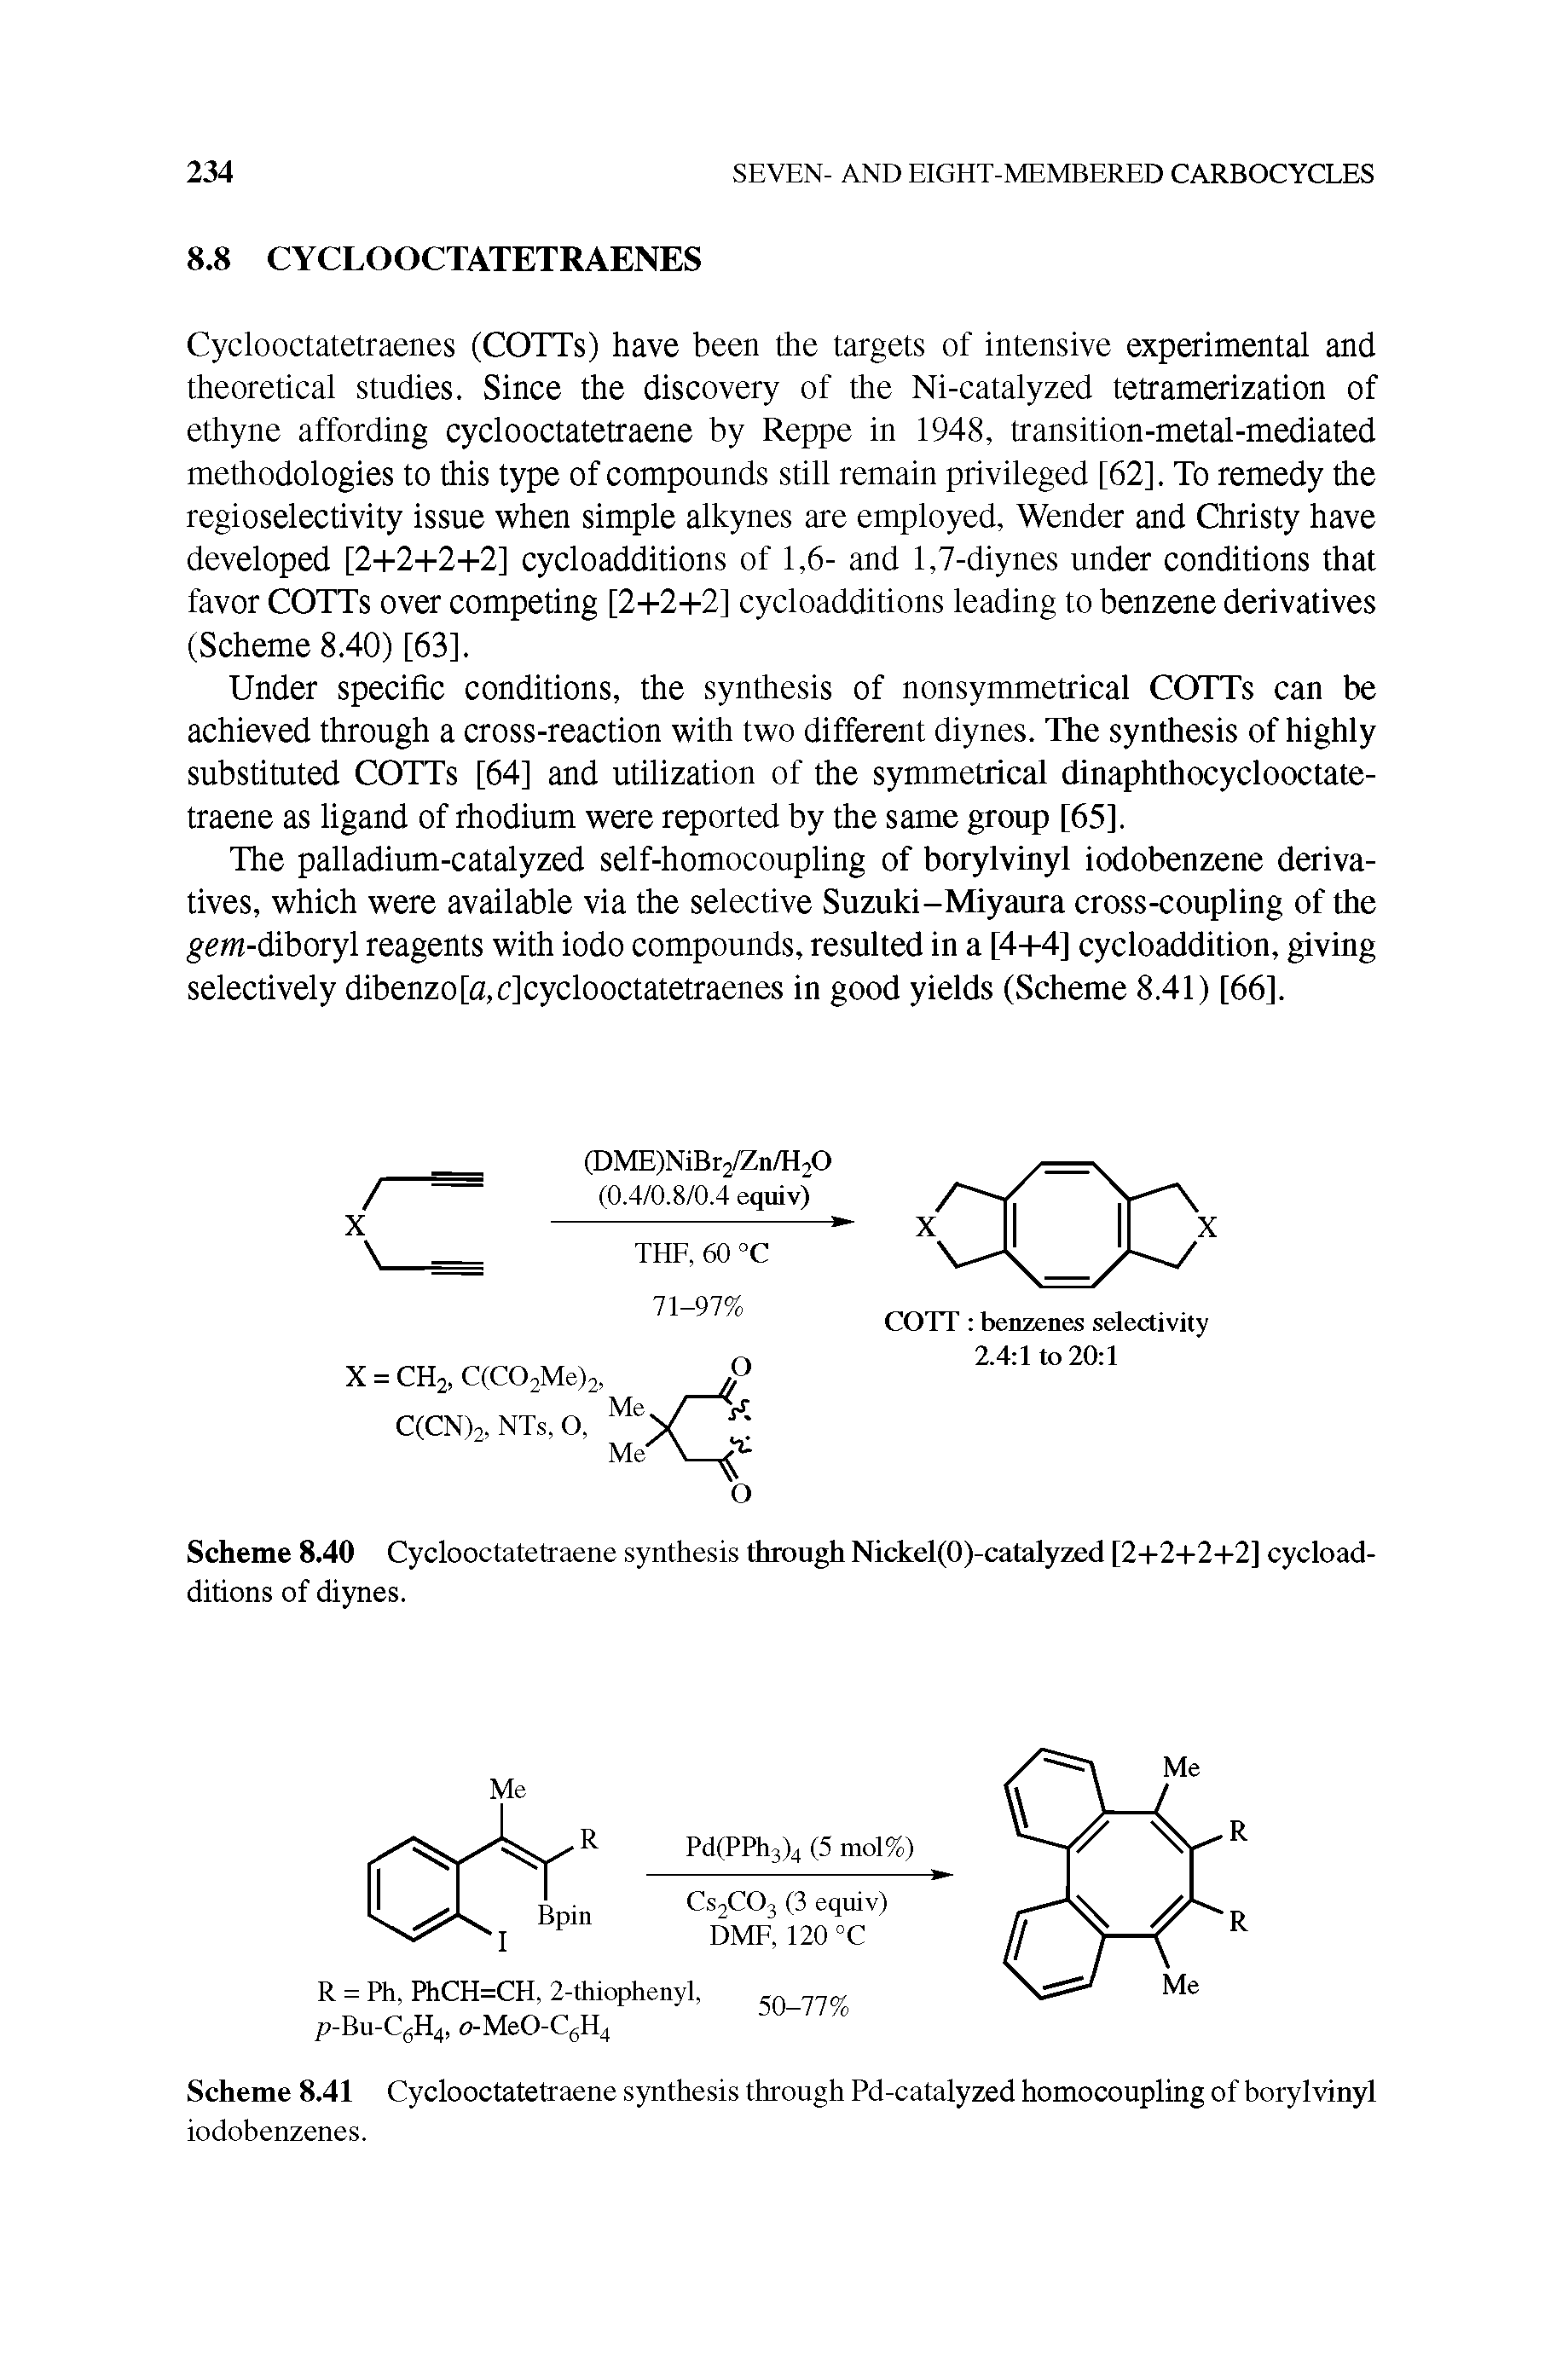 Scheme 8.41 Cyclooctatetraene synthesis throngh Pd-catalyzed homocoupling of horylvinyl iodohenzenes.